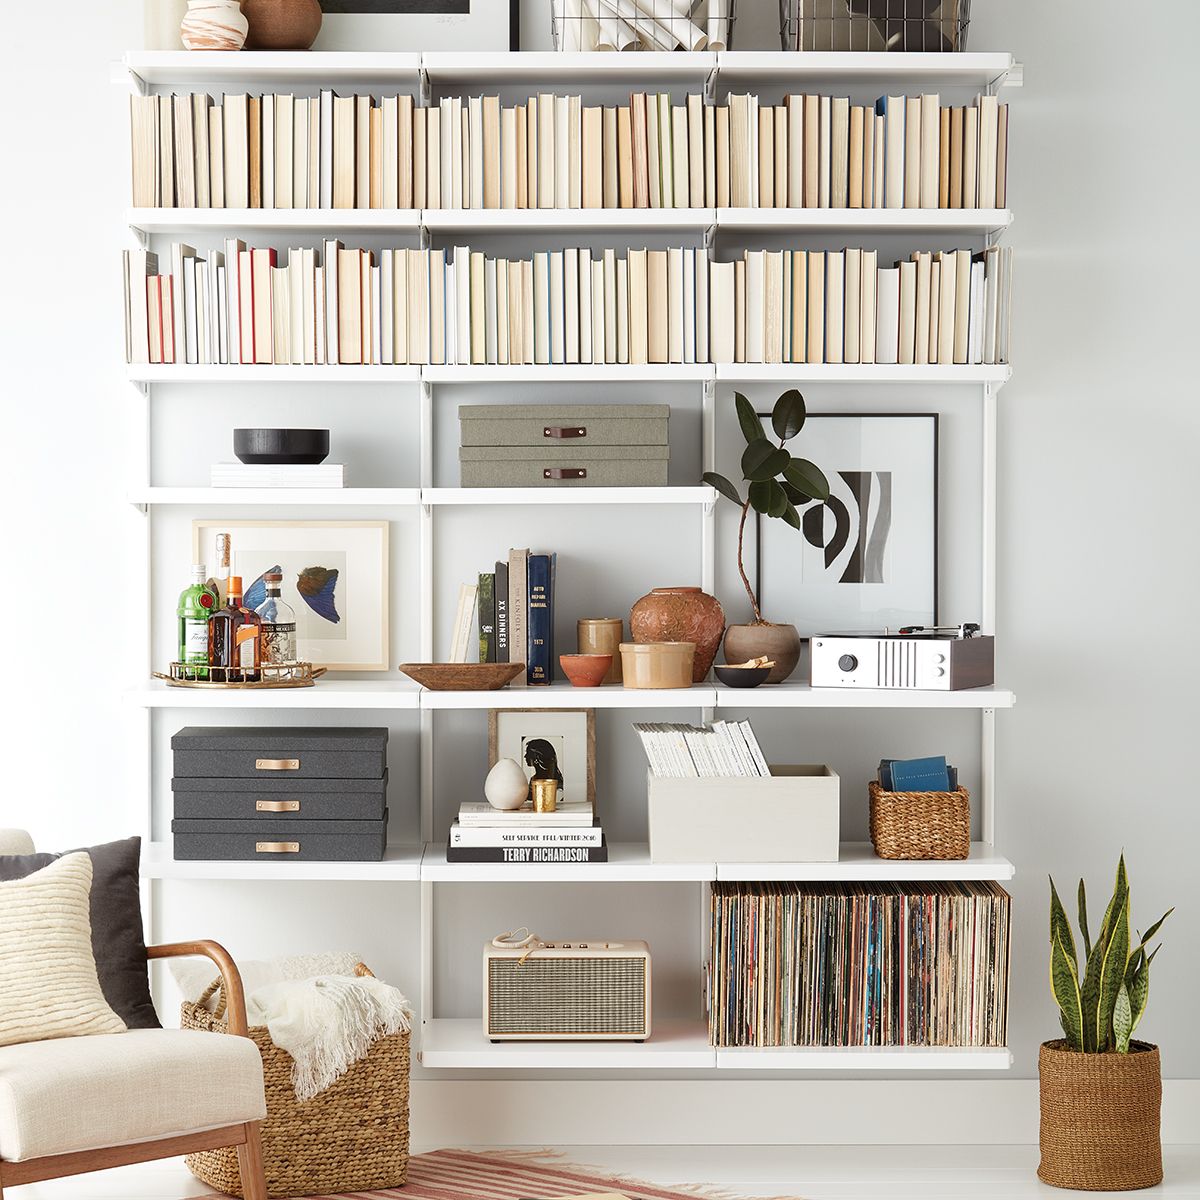 6' Decor Bookshelf | The Container Store